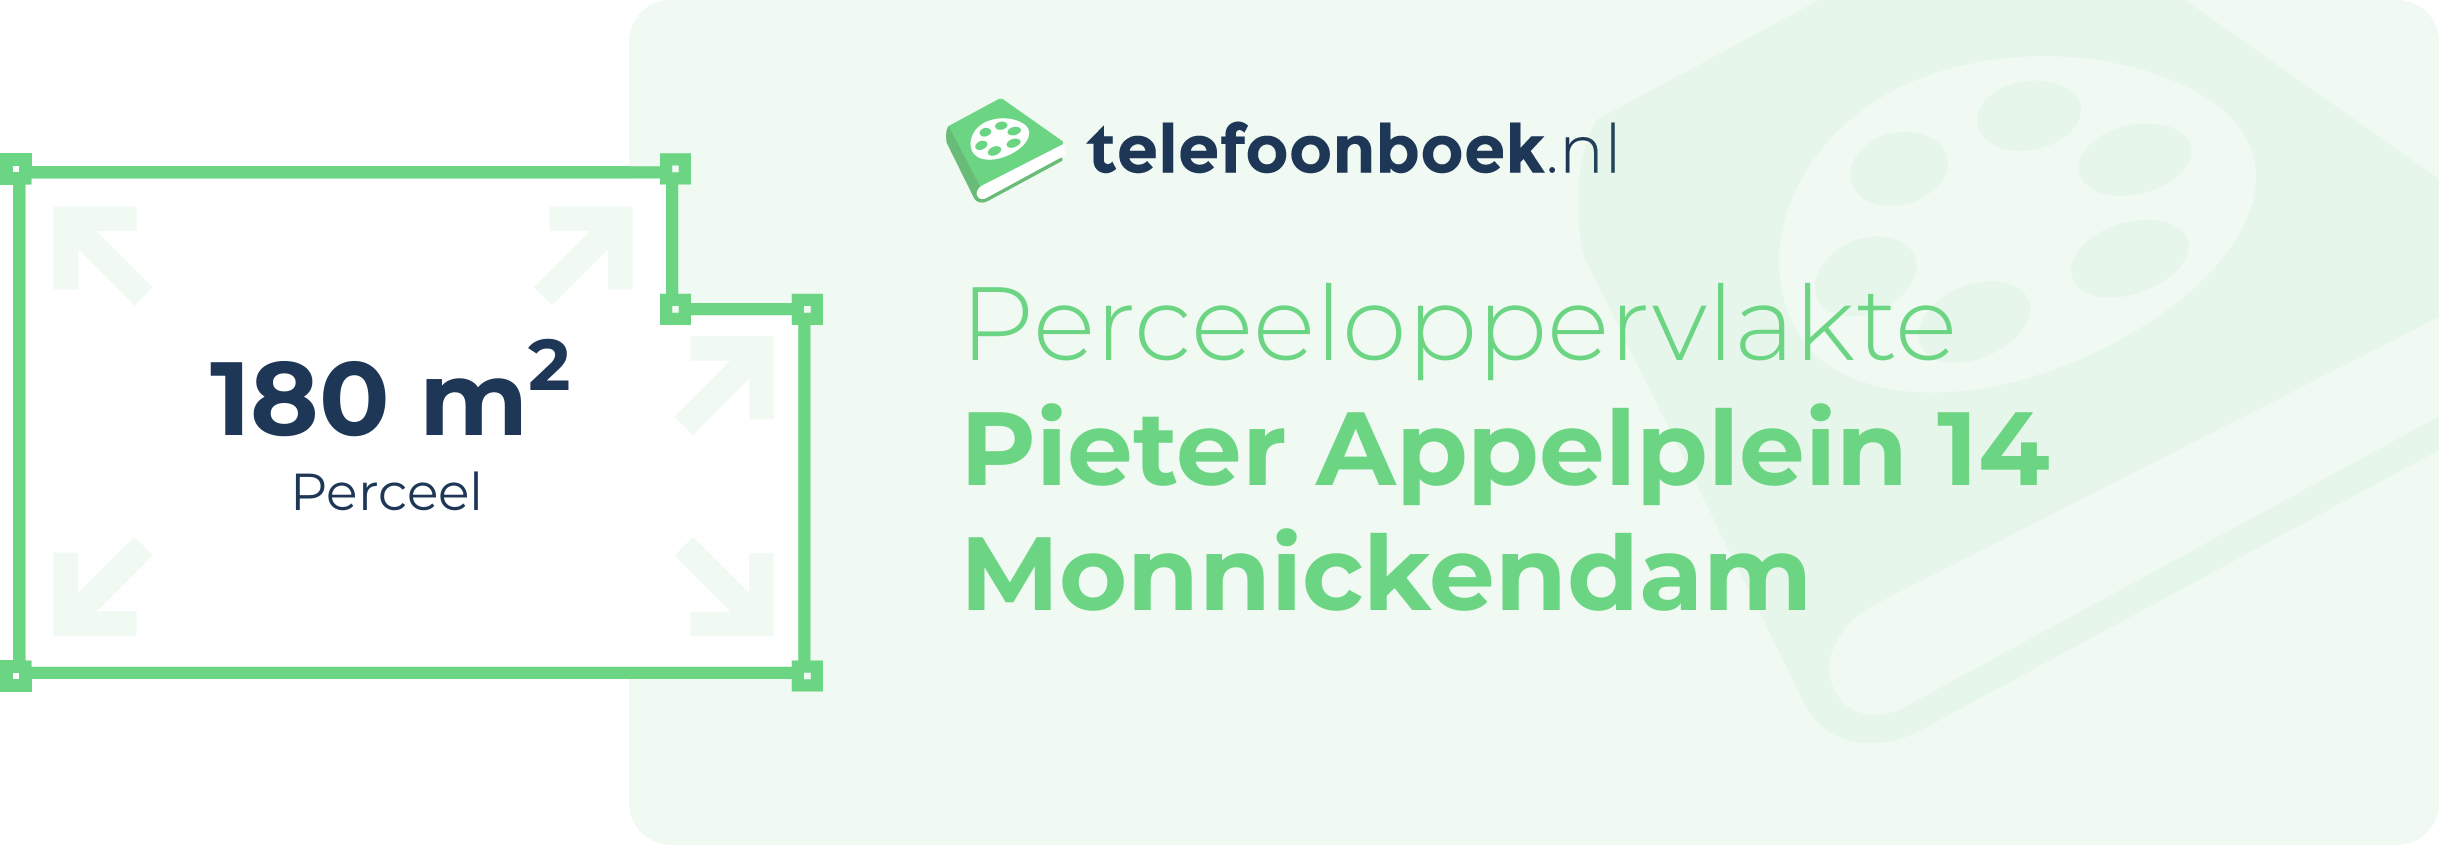 Perceeloppervlakte Pieter Appelplein 14 Monnickendam